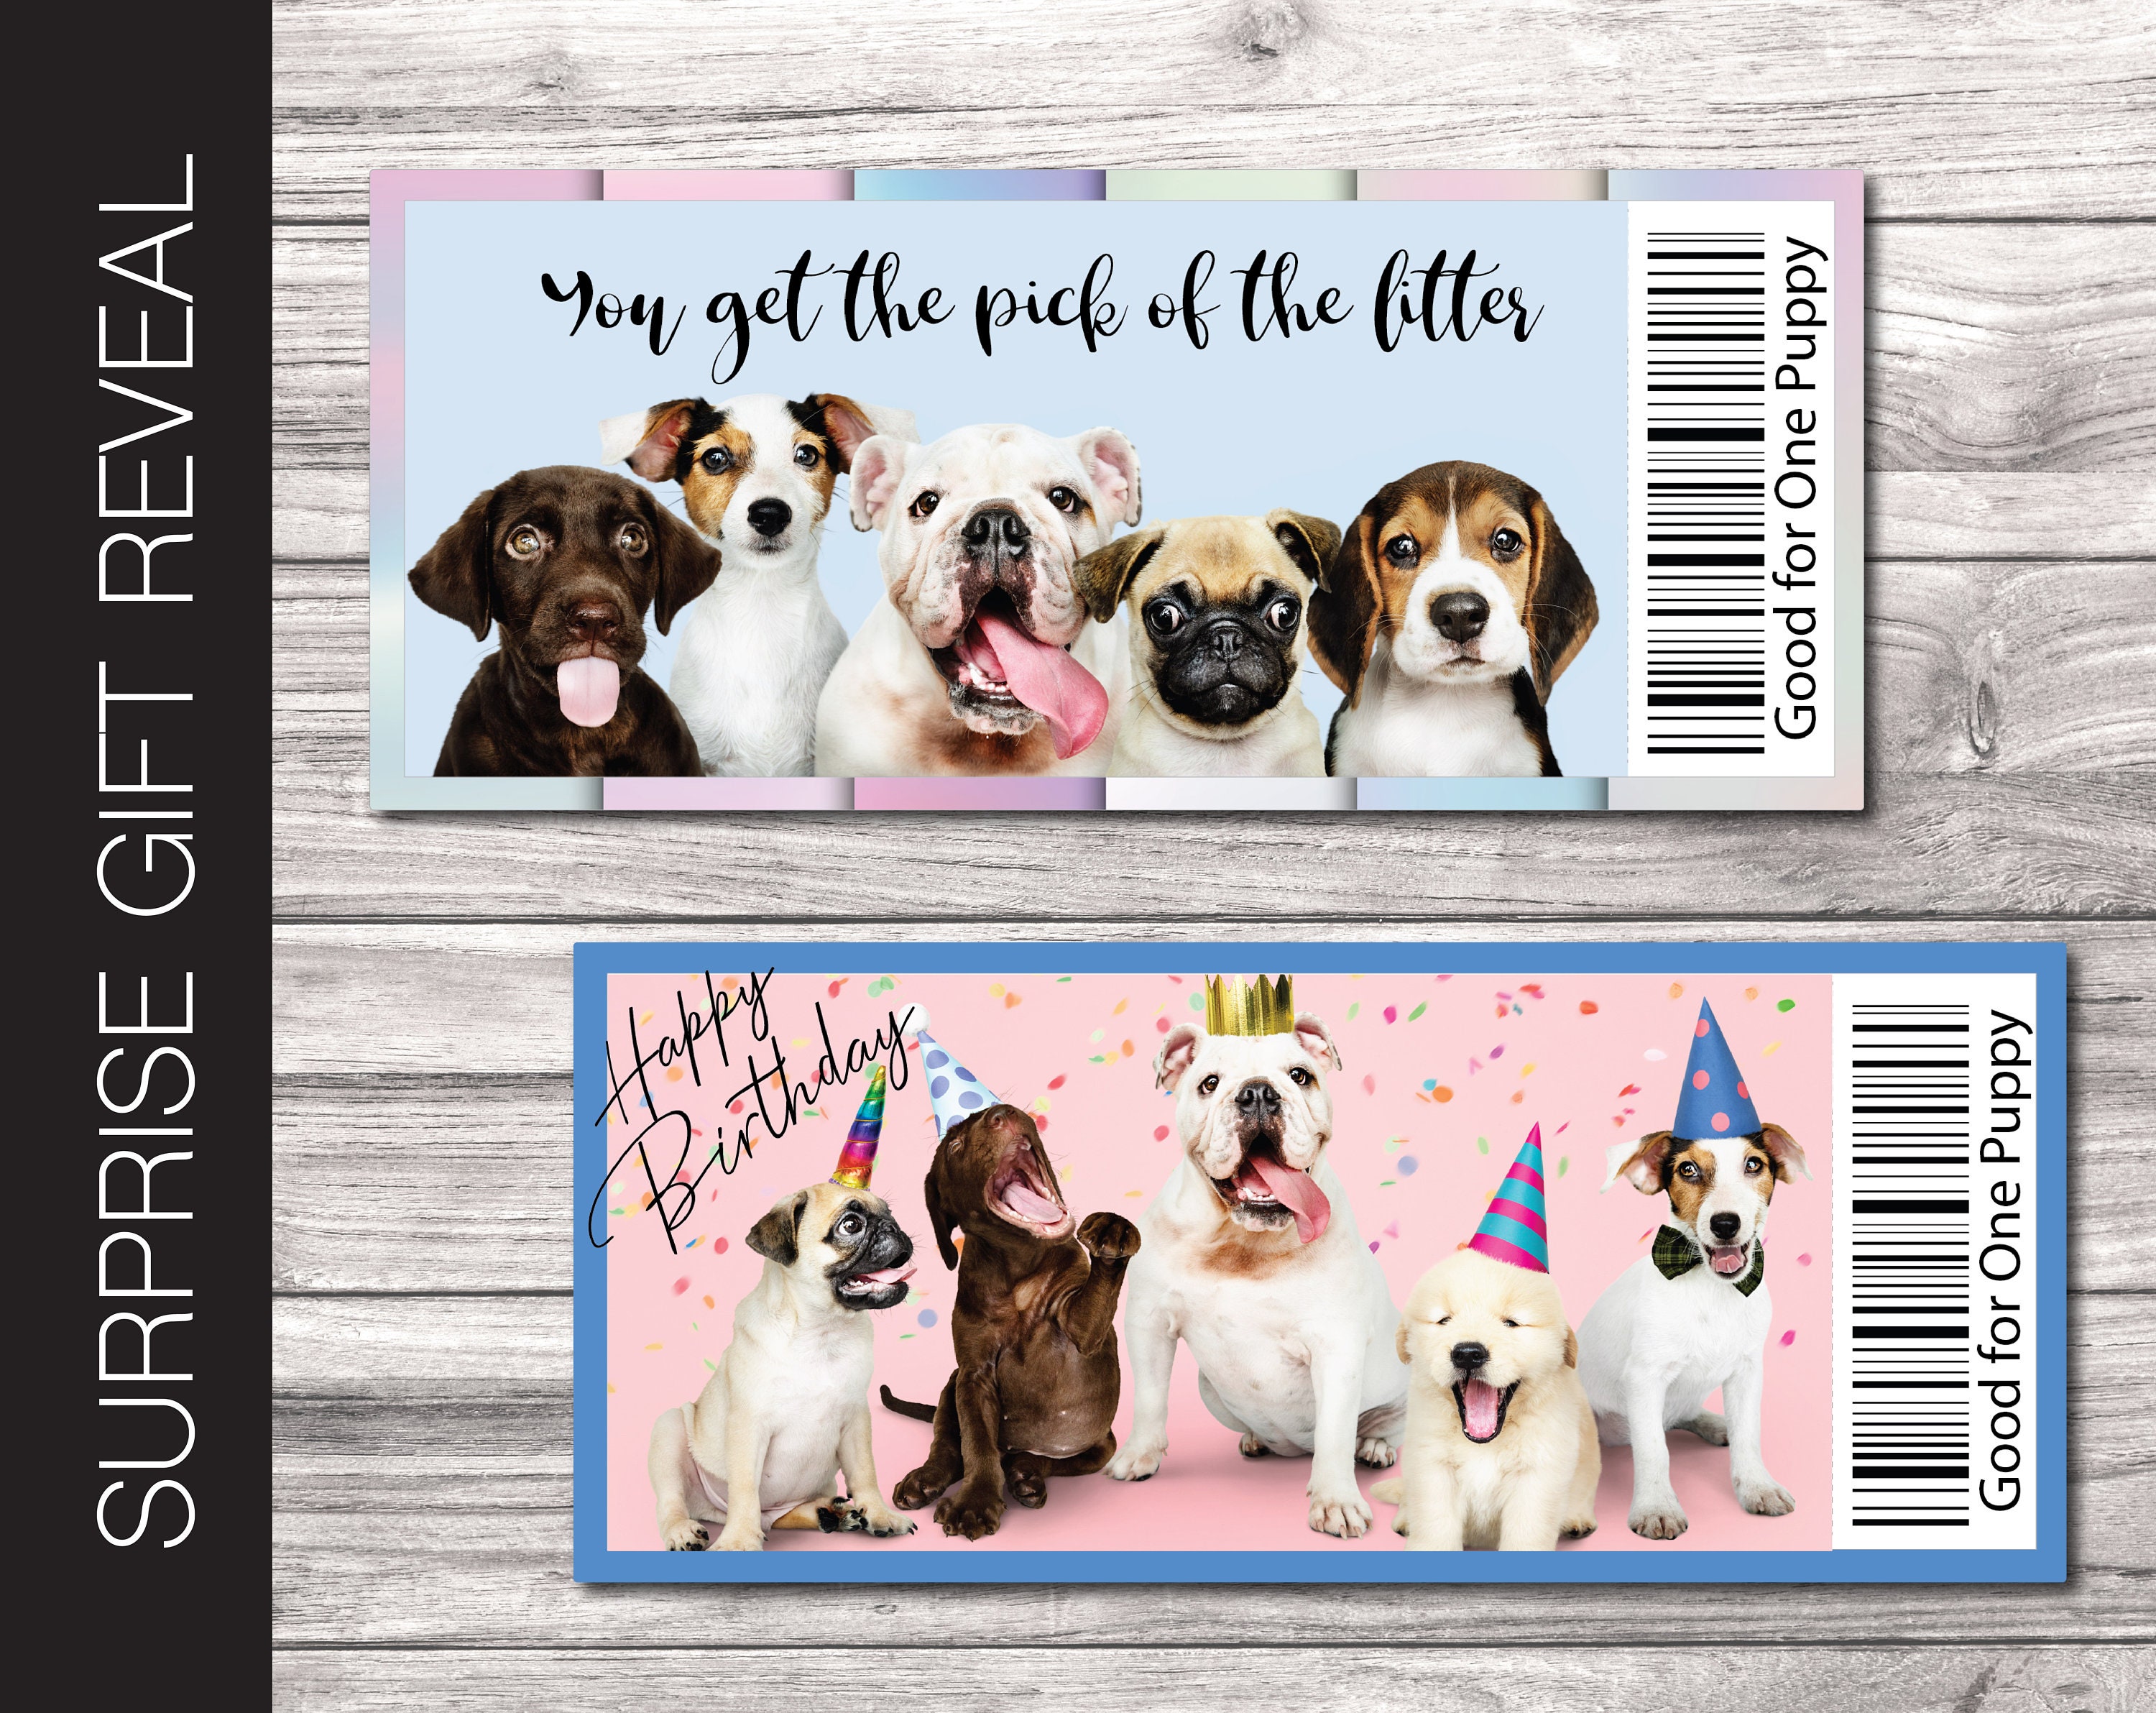 Puppy Presents! The Right Way to Gift a Pet - Raising Arizona Kids Magazine